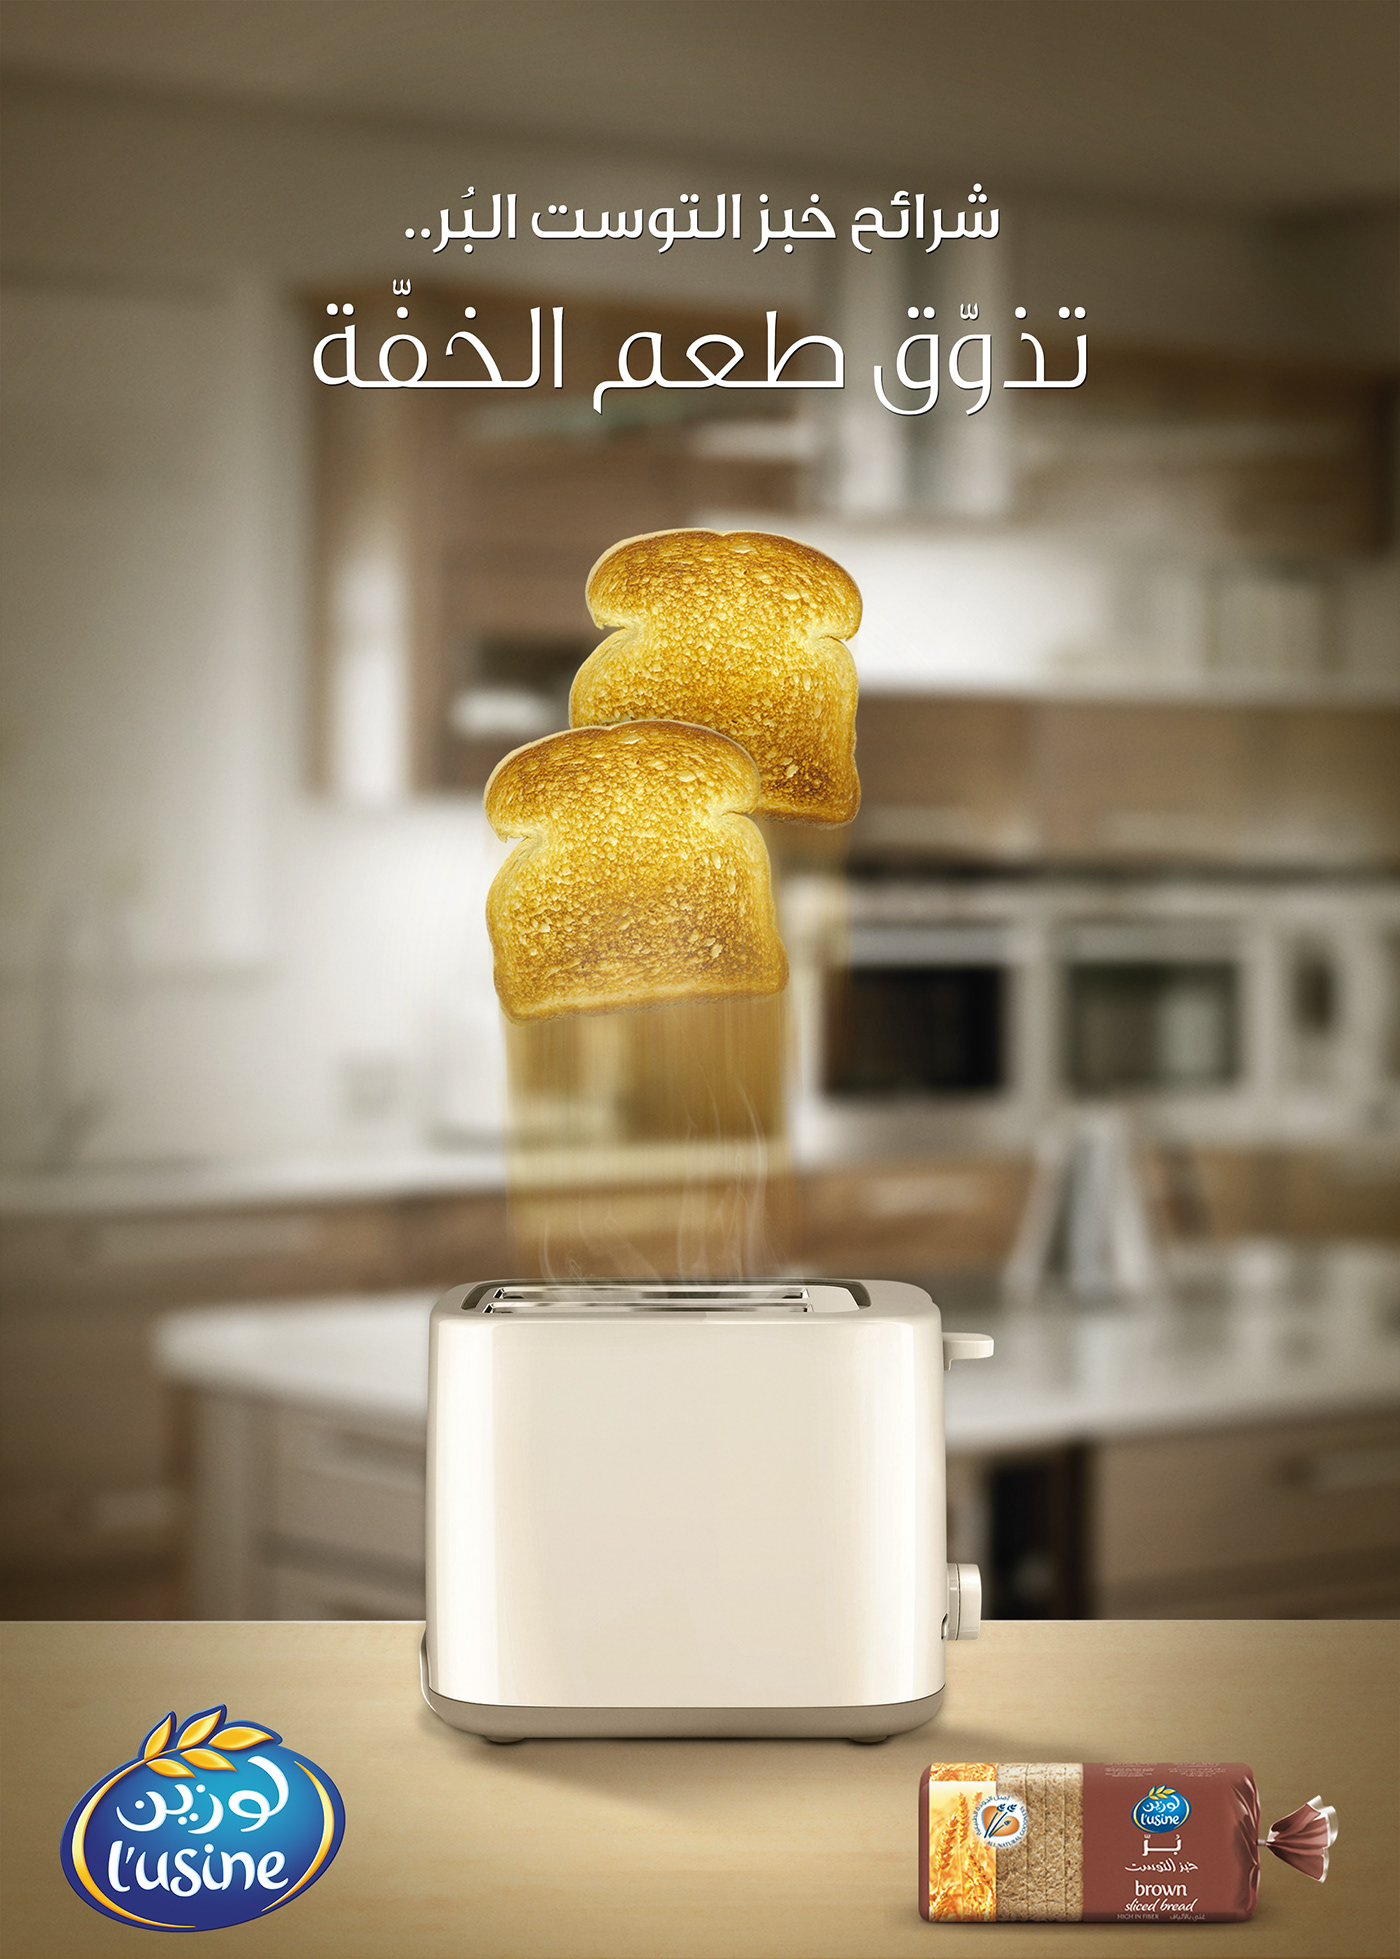 Creativity bread frying oil AC healthy Saudi Arabia amsterdam fitness corporate Soft Skills